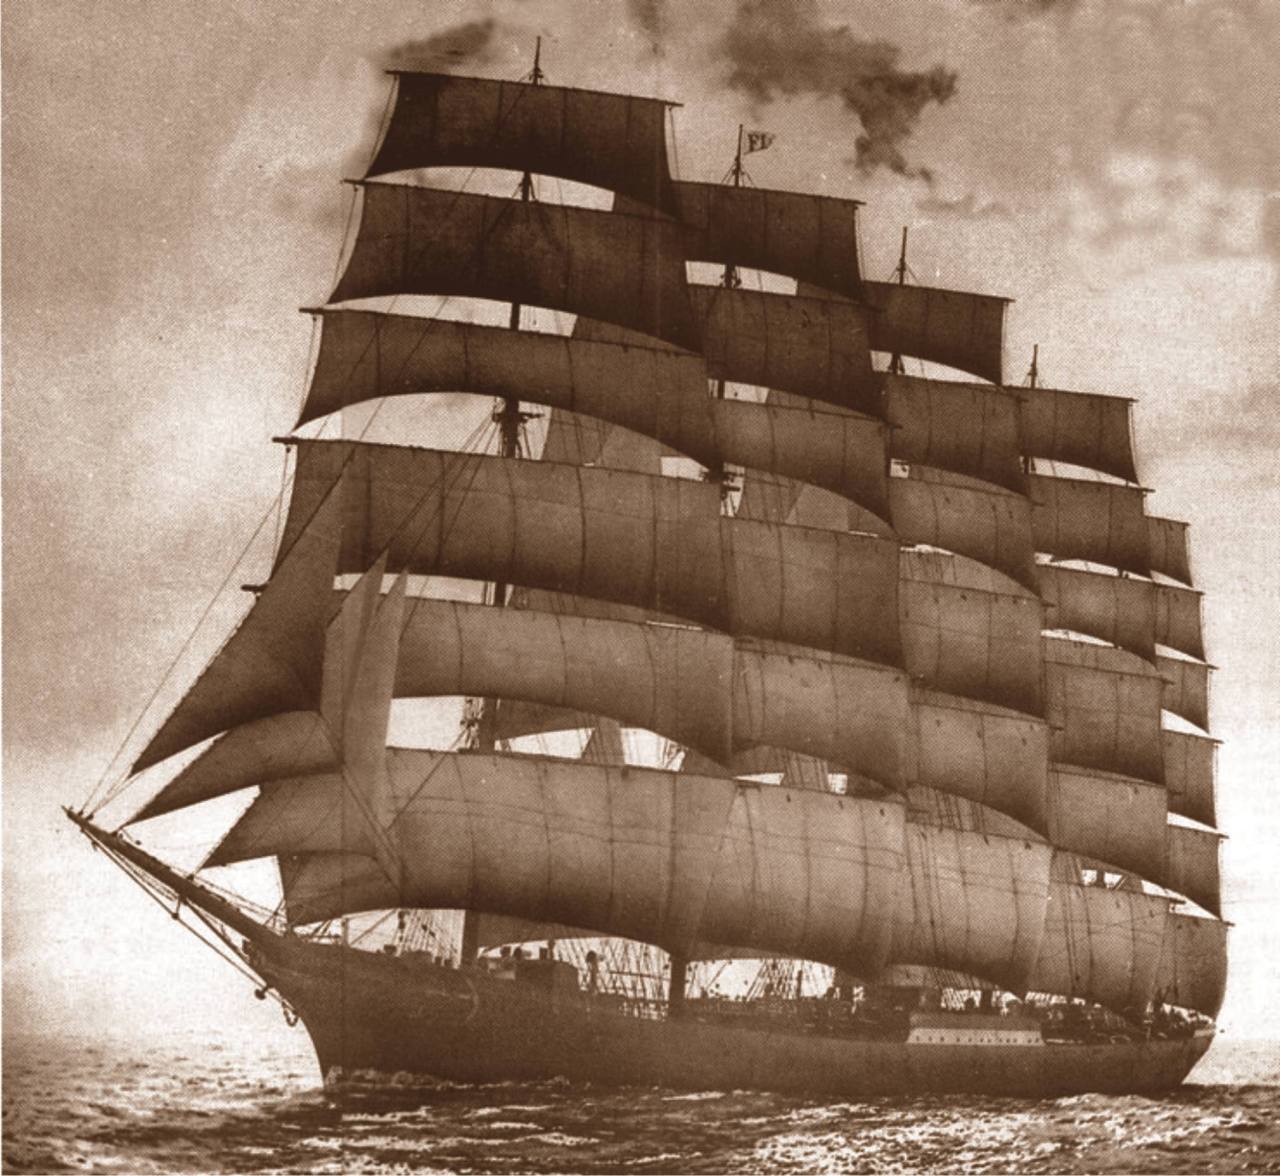 navaphoto:
“Preussen, five mast, and very fast fragata of XIX century. 16 knots
”